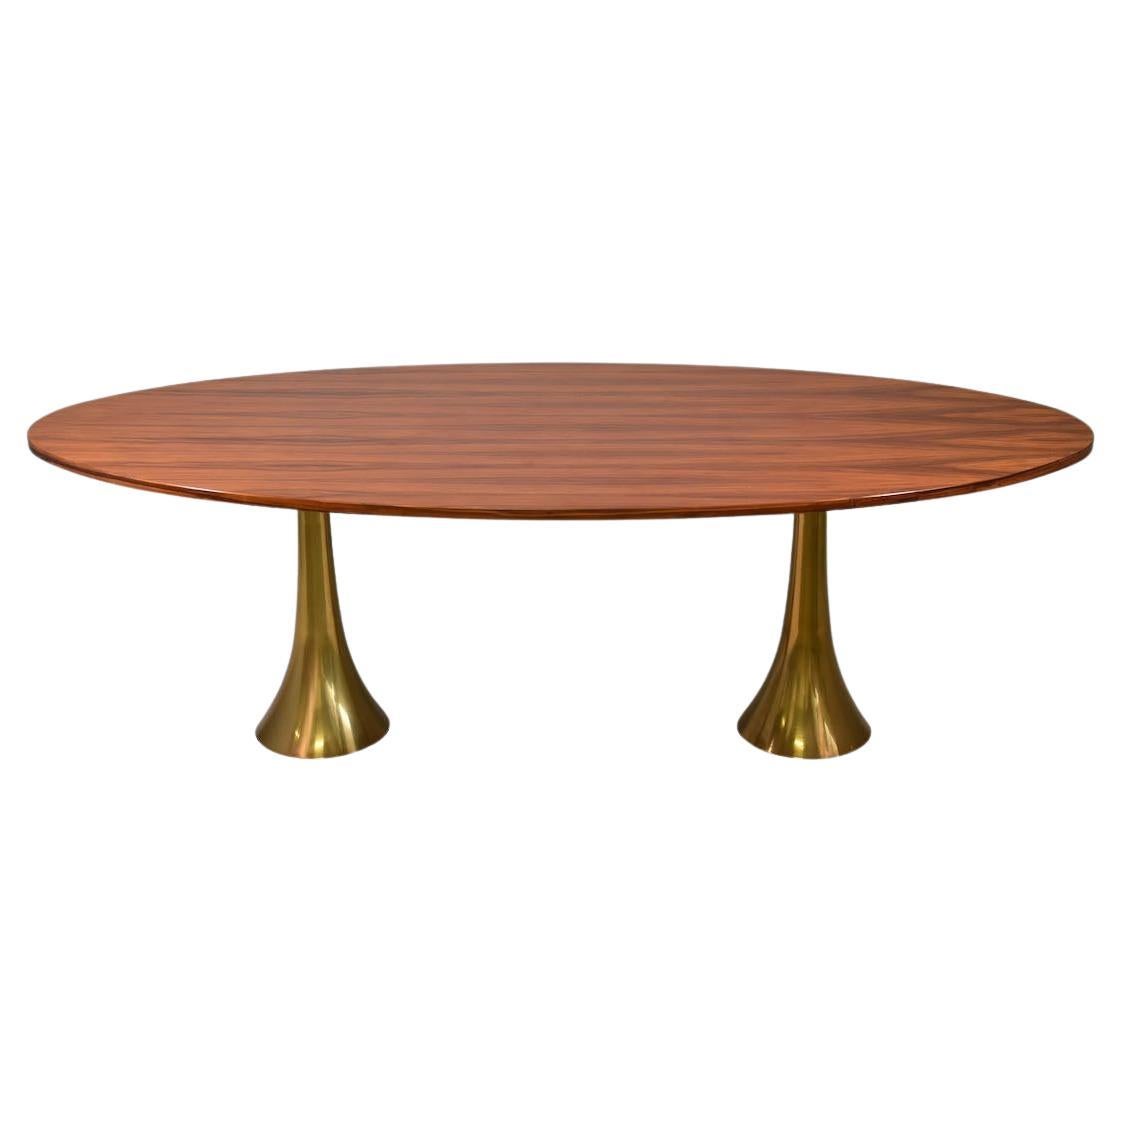 Rare Angelo Mangiarotti Bernini Oval Table, Bronze Legs and Wooden Top, 1957